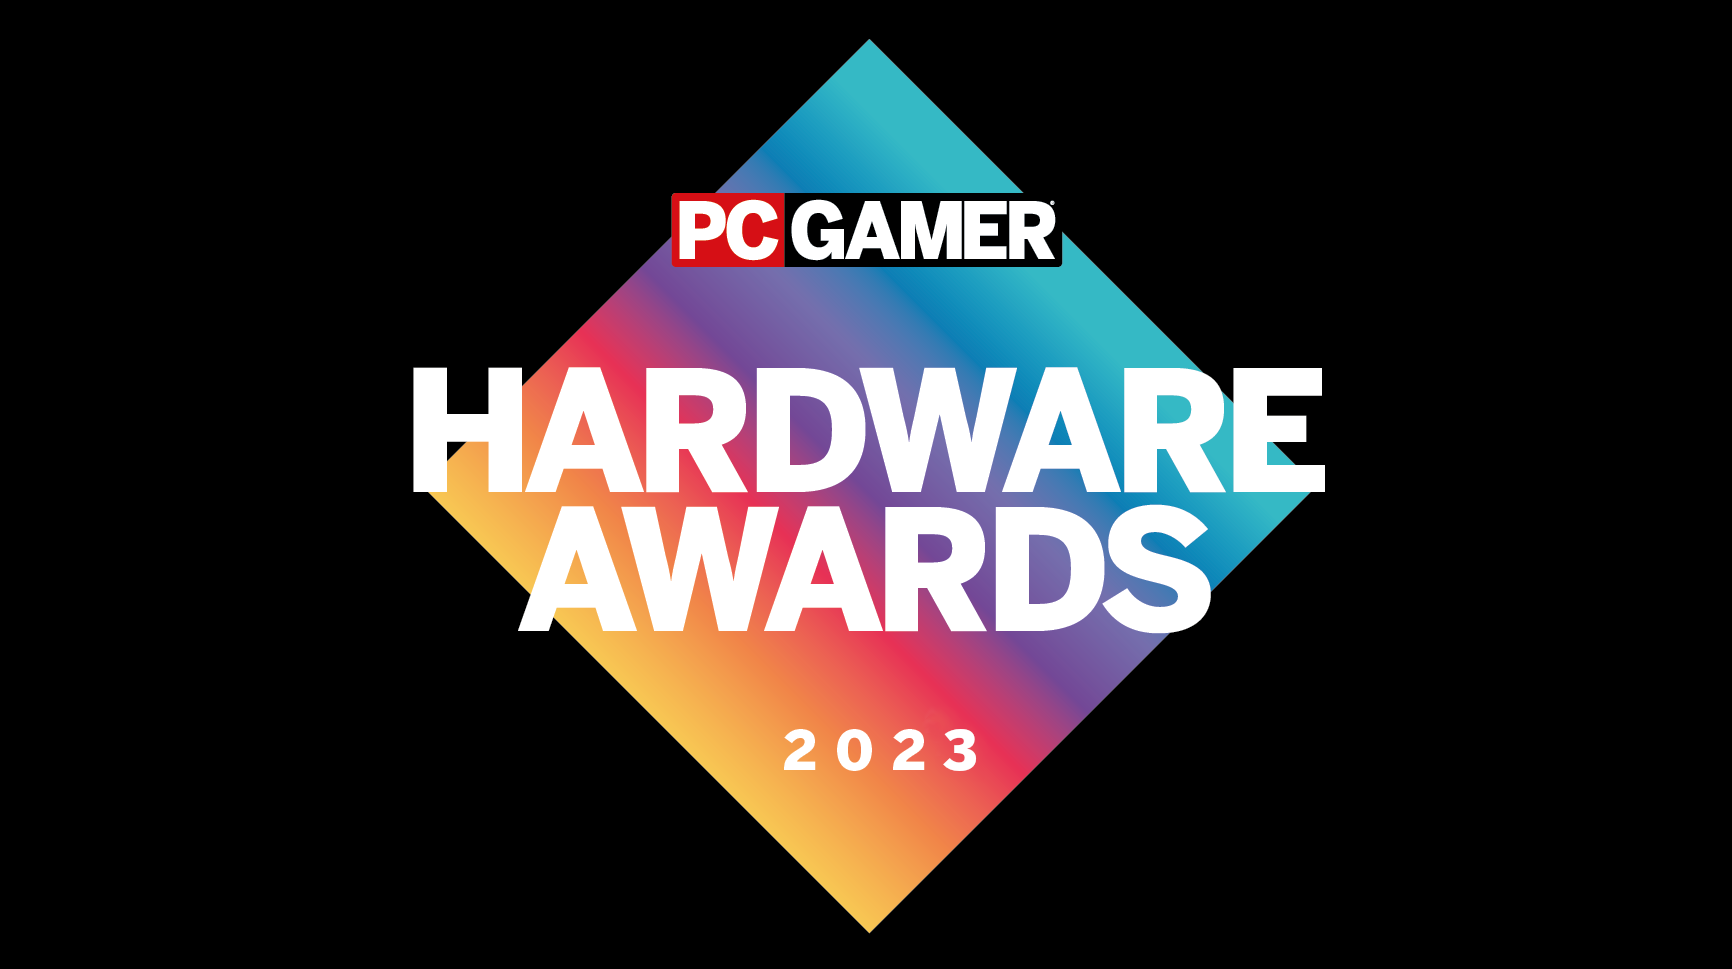 PC Gamer Hardware Awards 2023: The winners